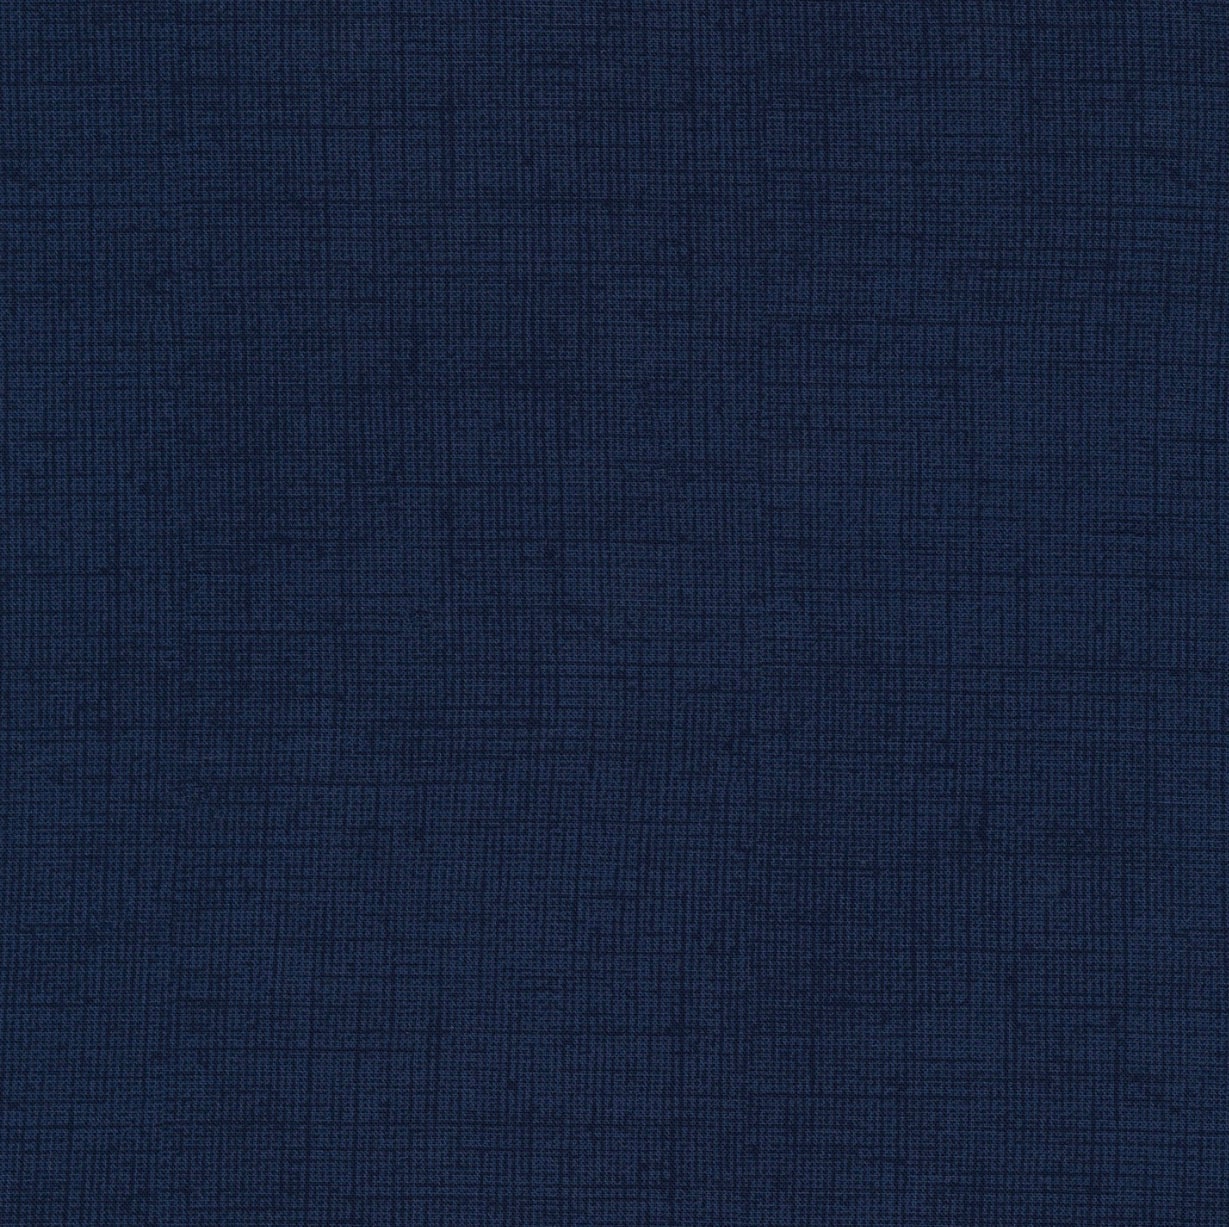 Navy Mix Blender Texture Cotton Fabric By Timeless Treasures Fabrics C 7200 Navy